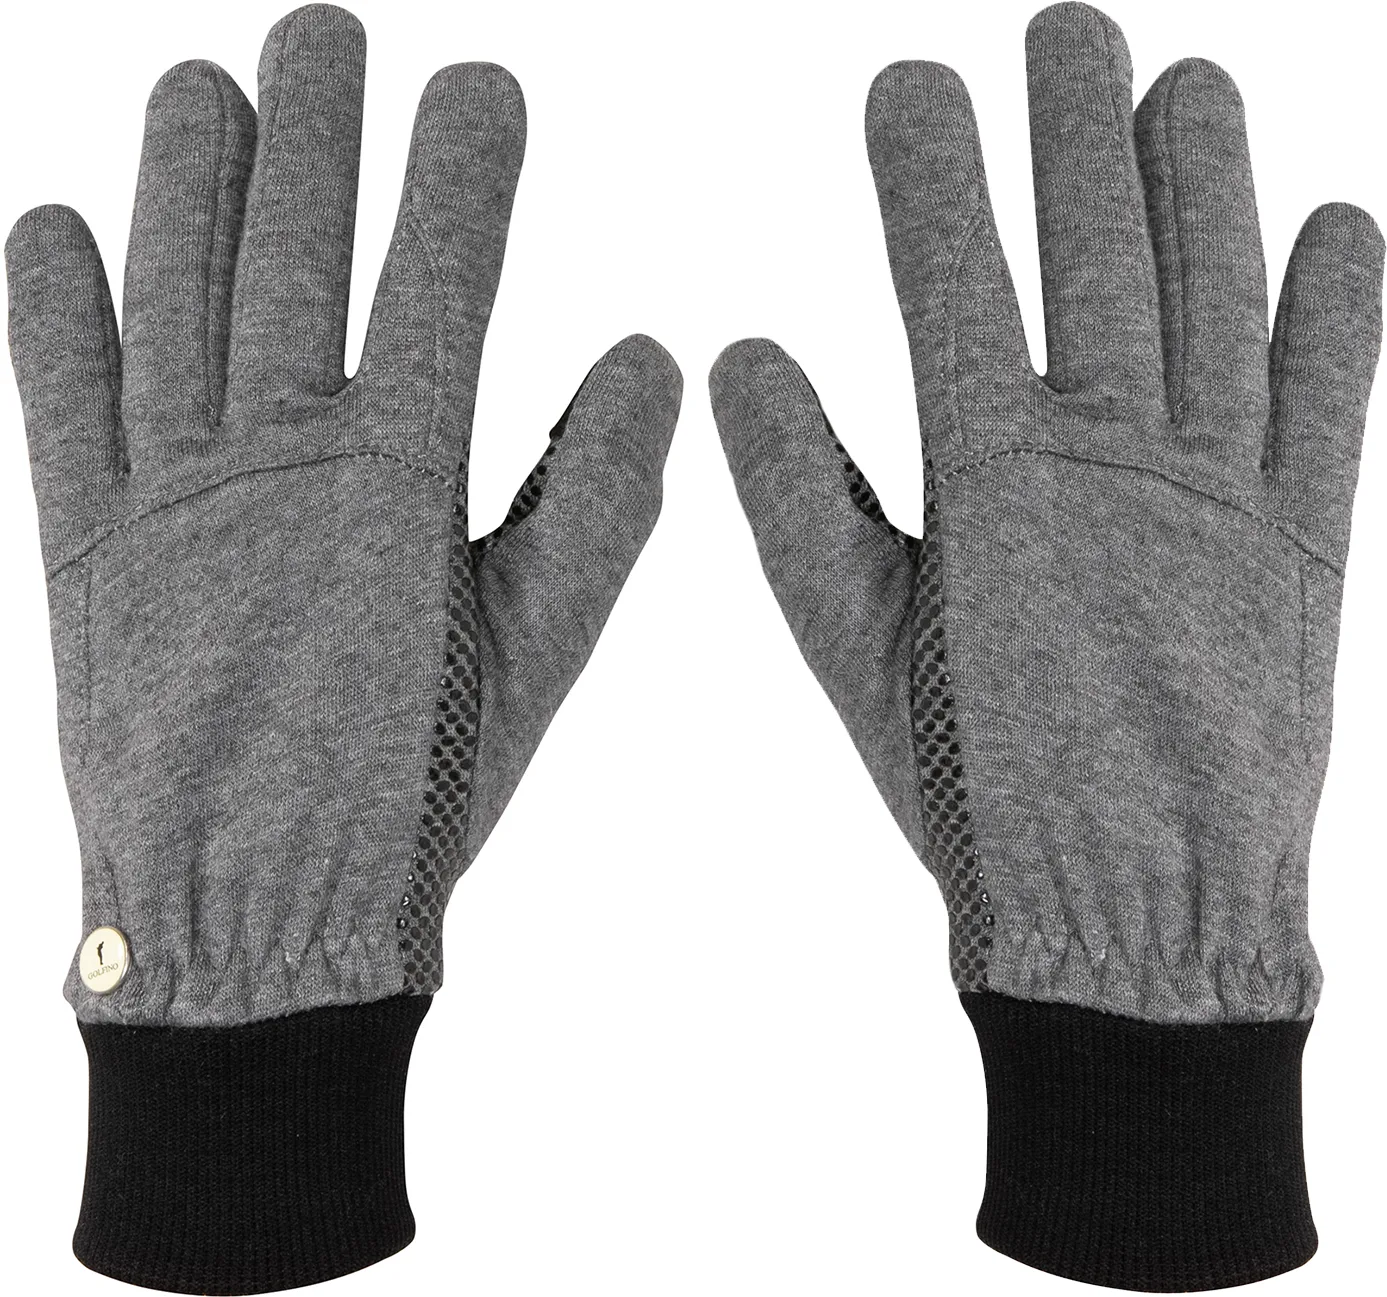 Golfino Functional Winter Handschuhe, mittelgrau/schwarz